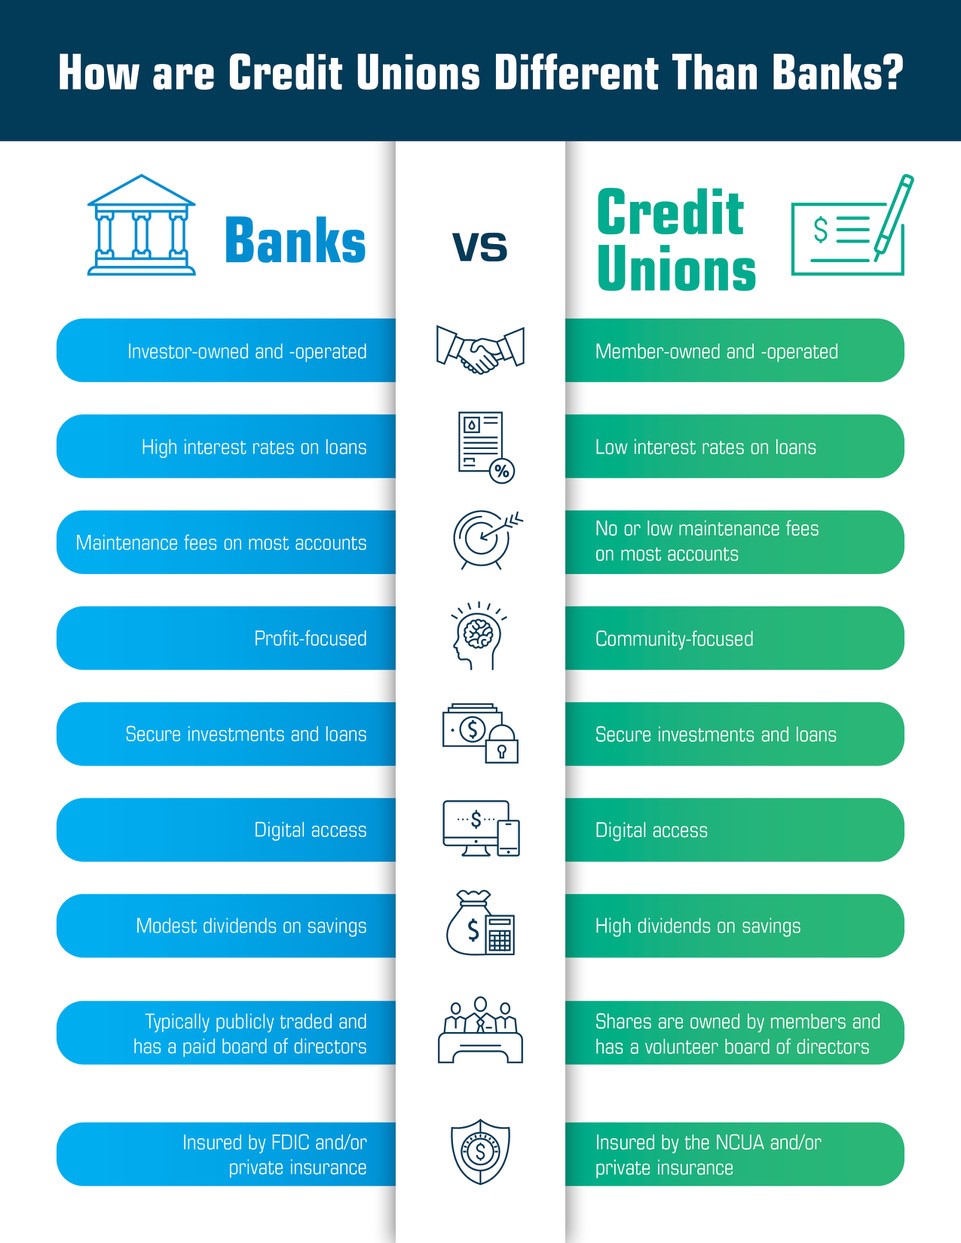 Banks Vs Credit Unions